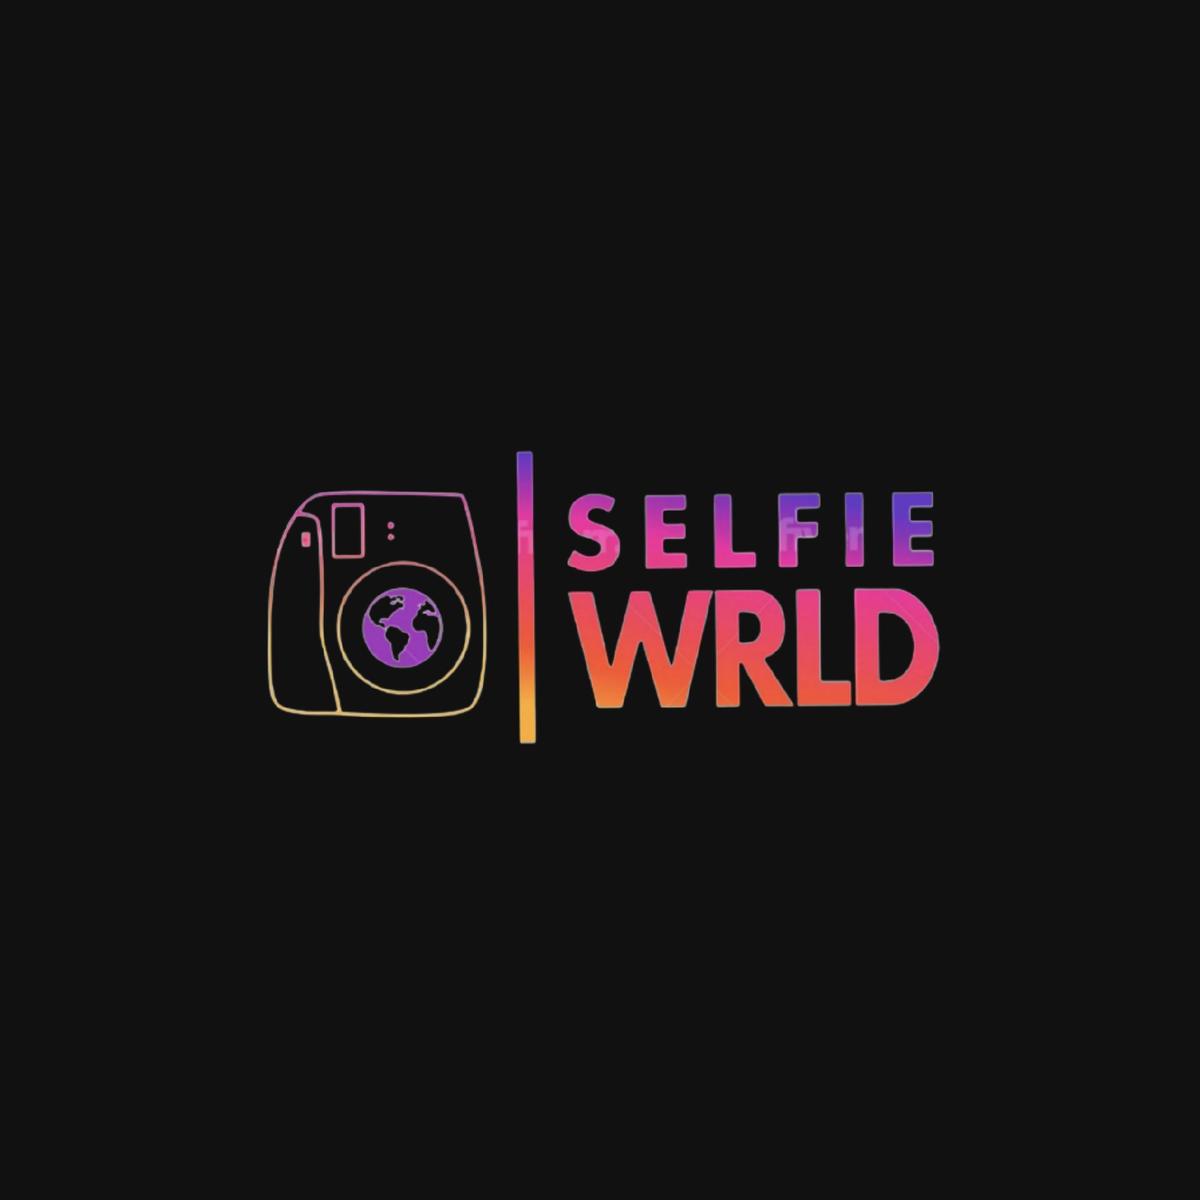 SelfieWrldTol's images